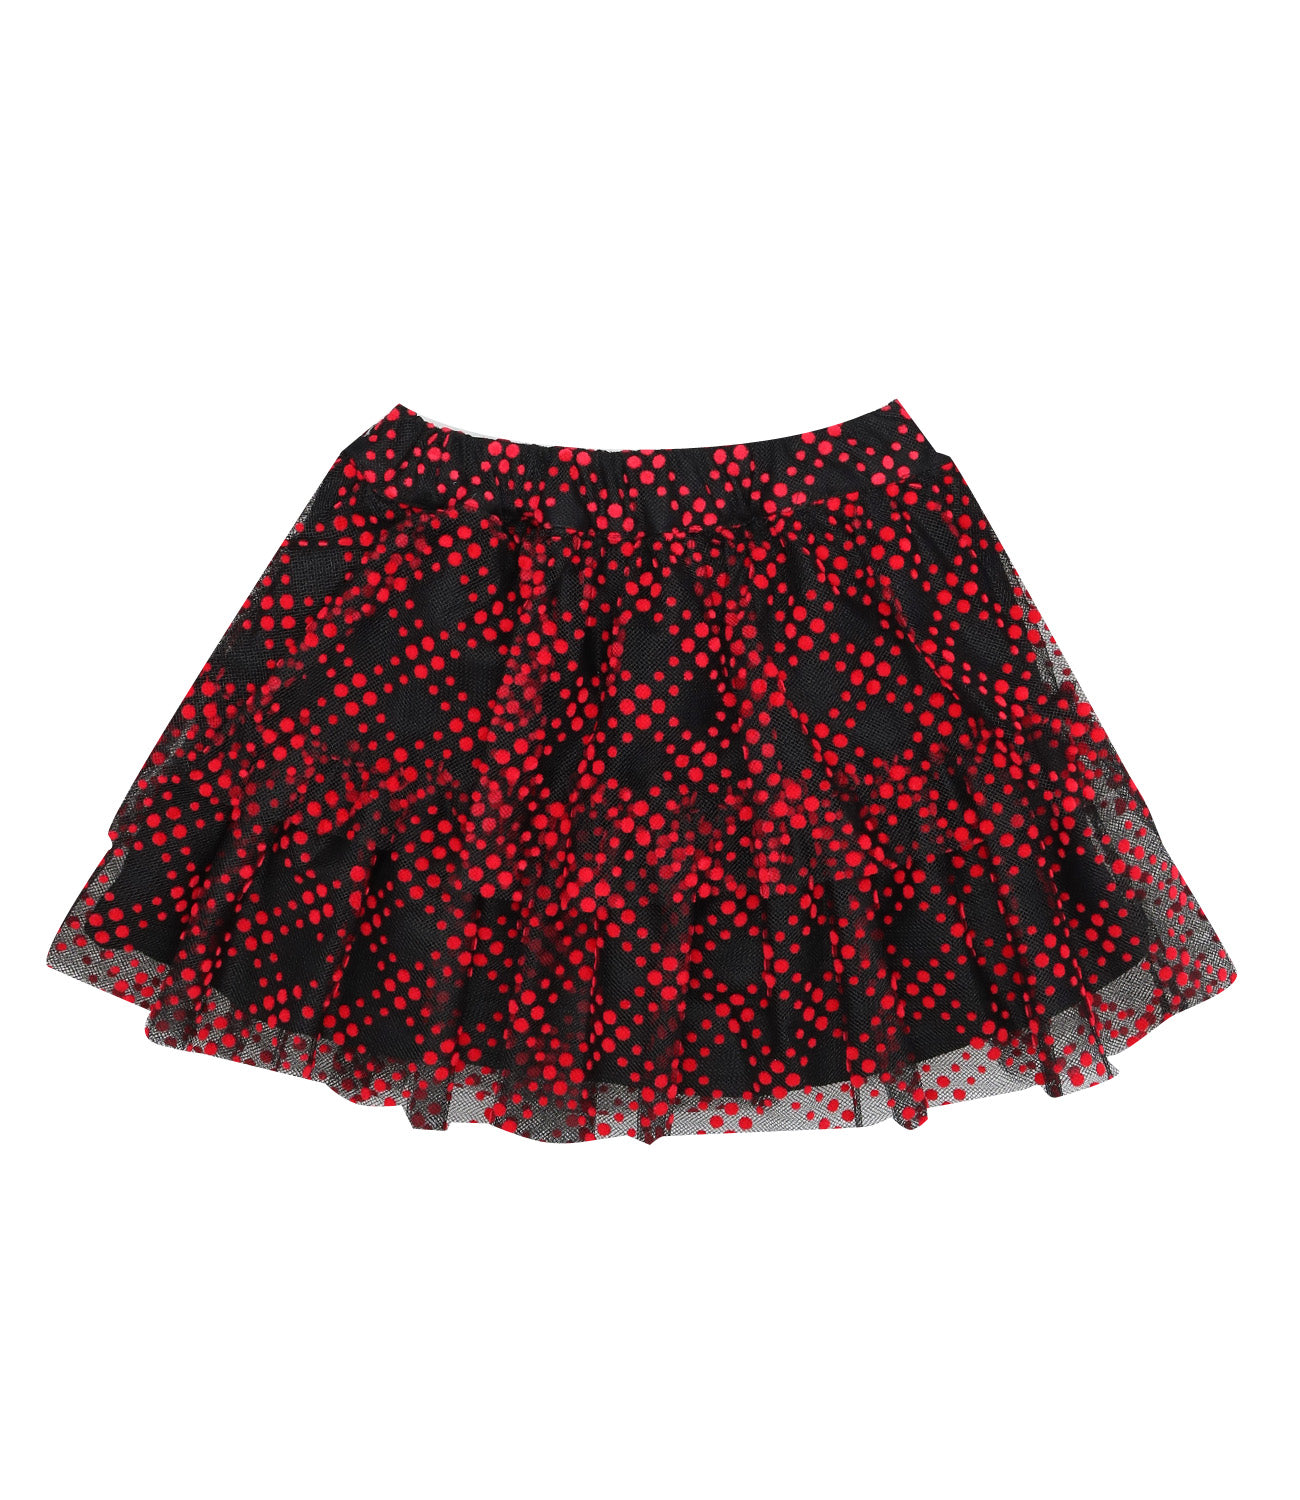 Philosophy di Lorenzo Serafini Kids | Red and Black Skirt